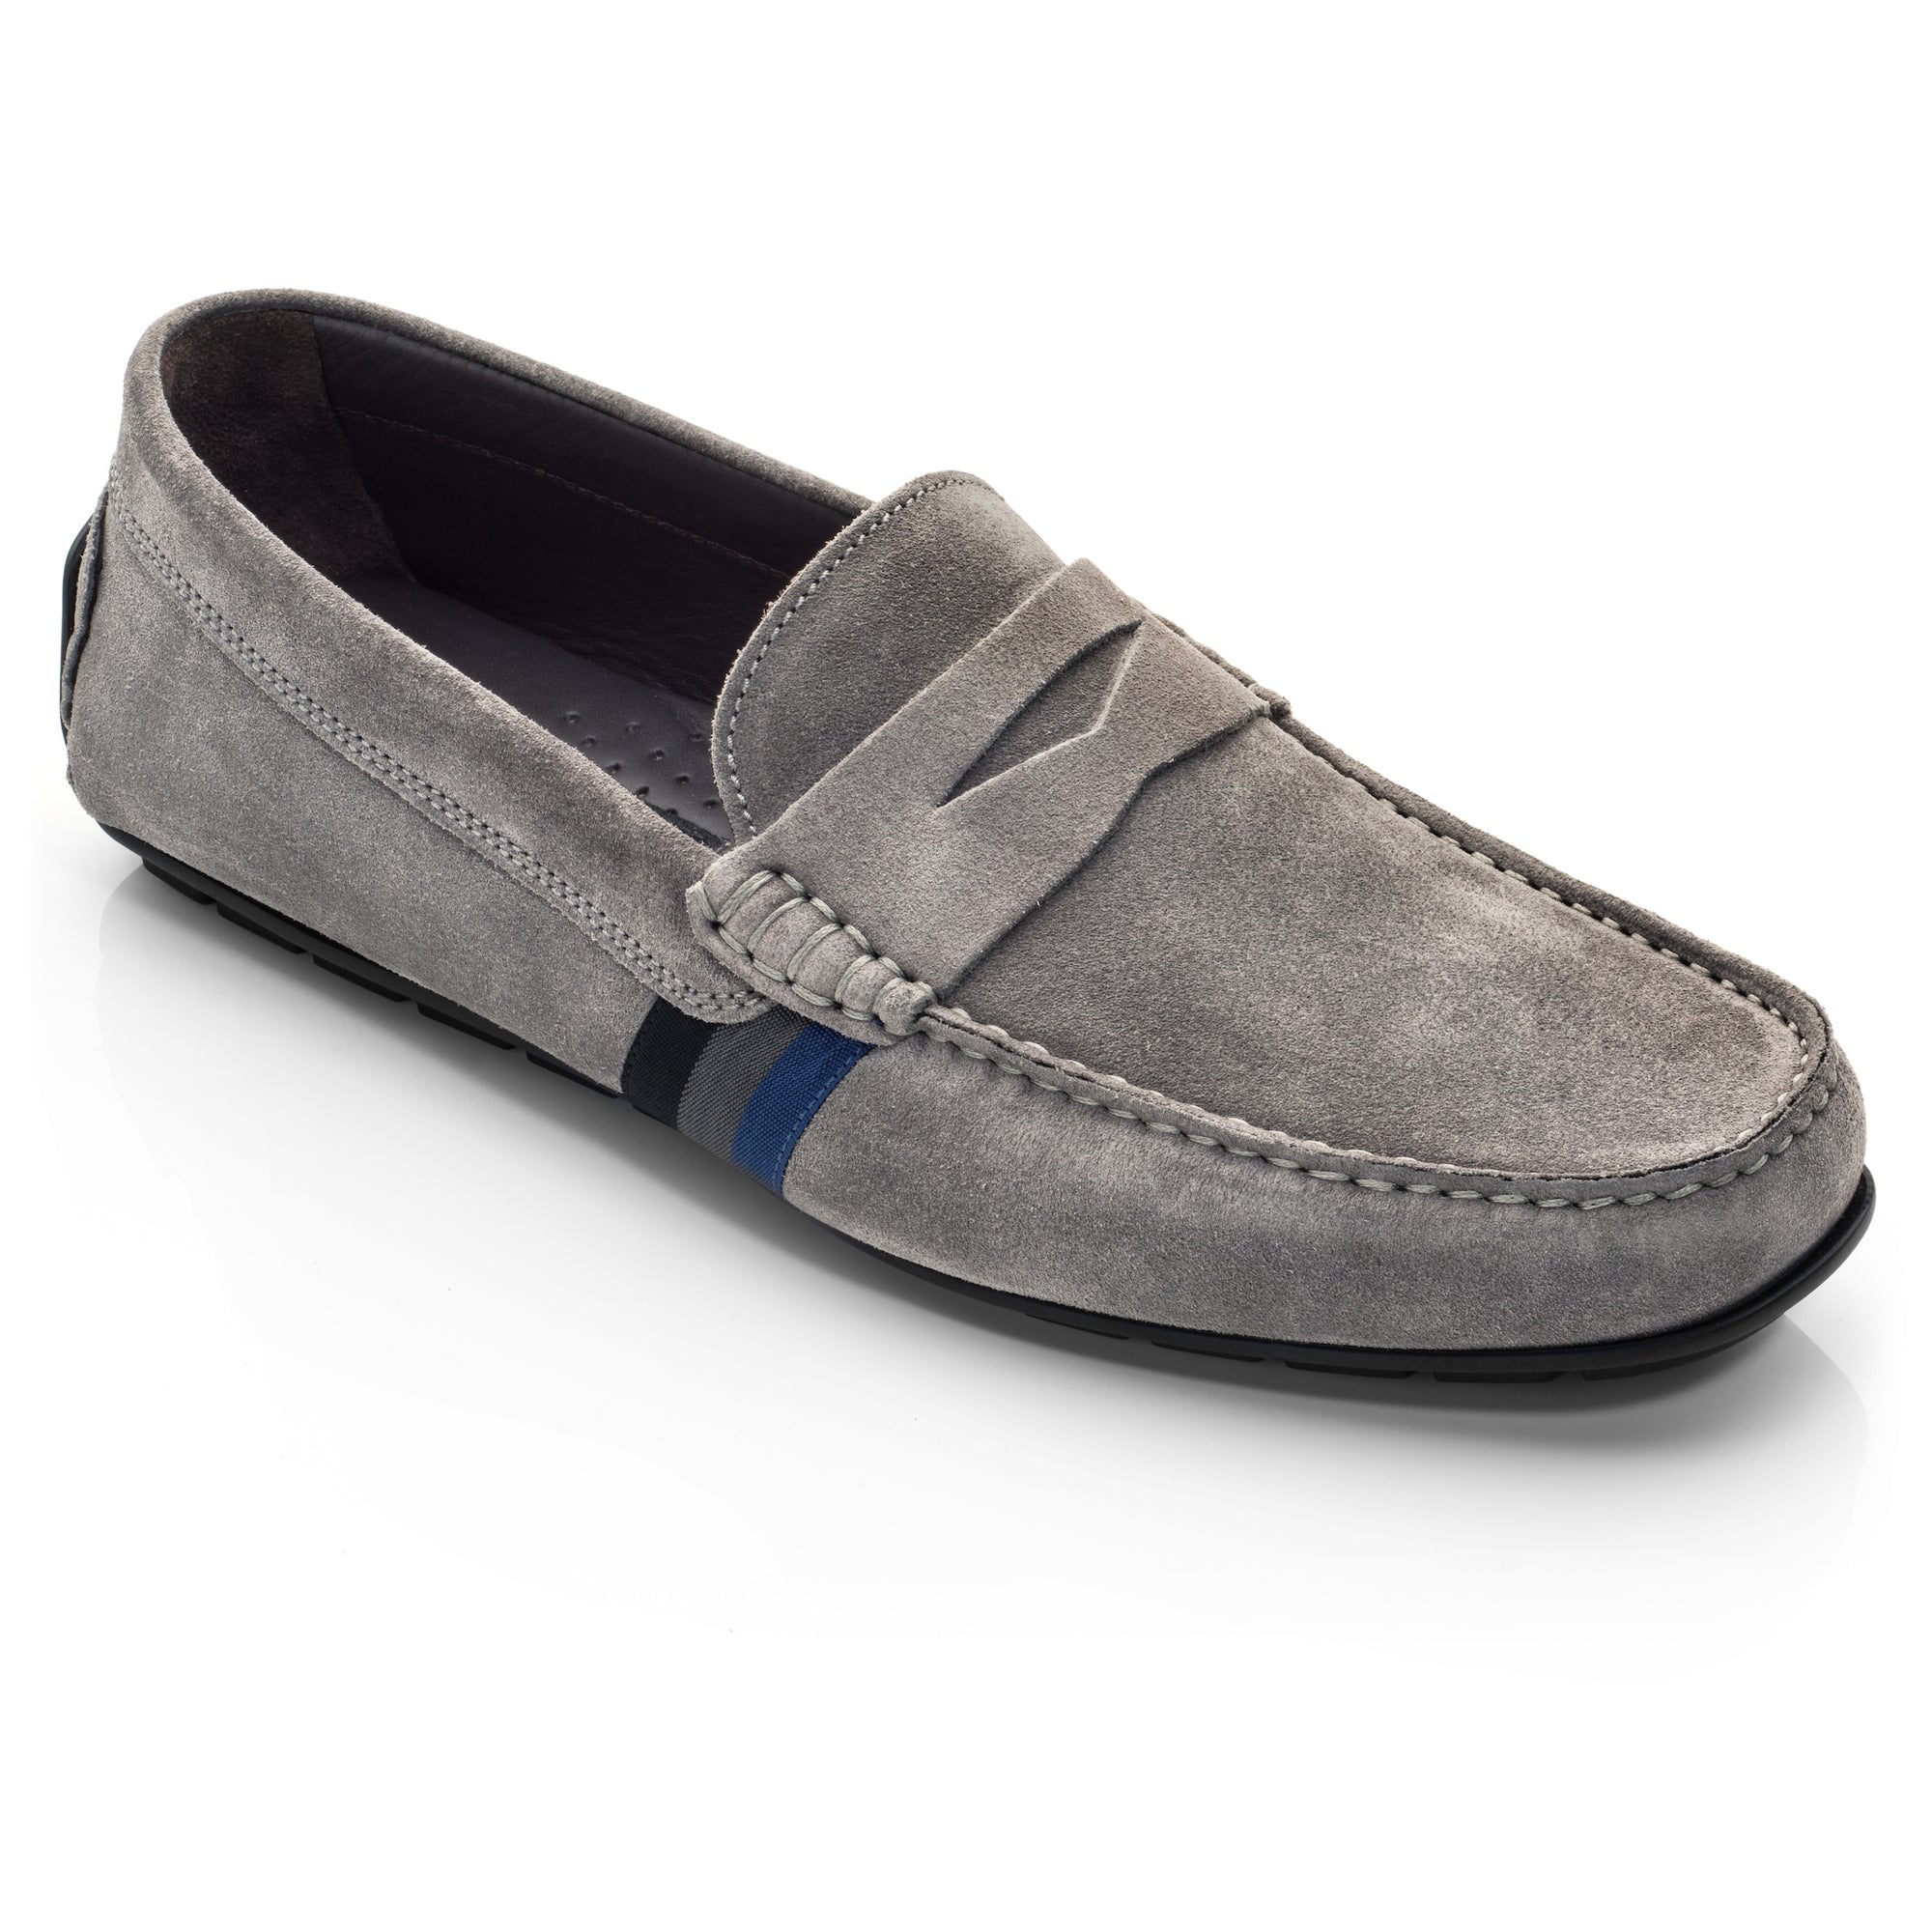 pale grey suede shoes